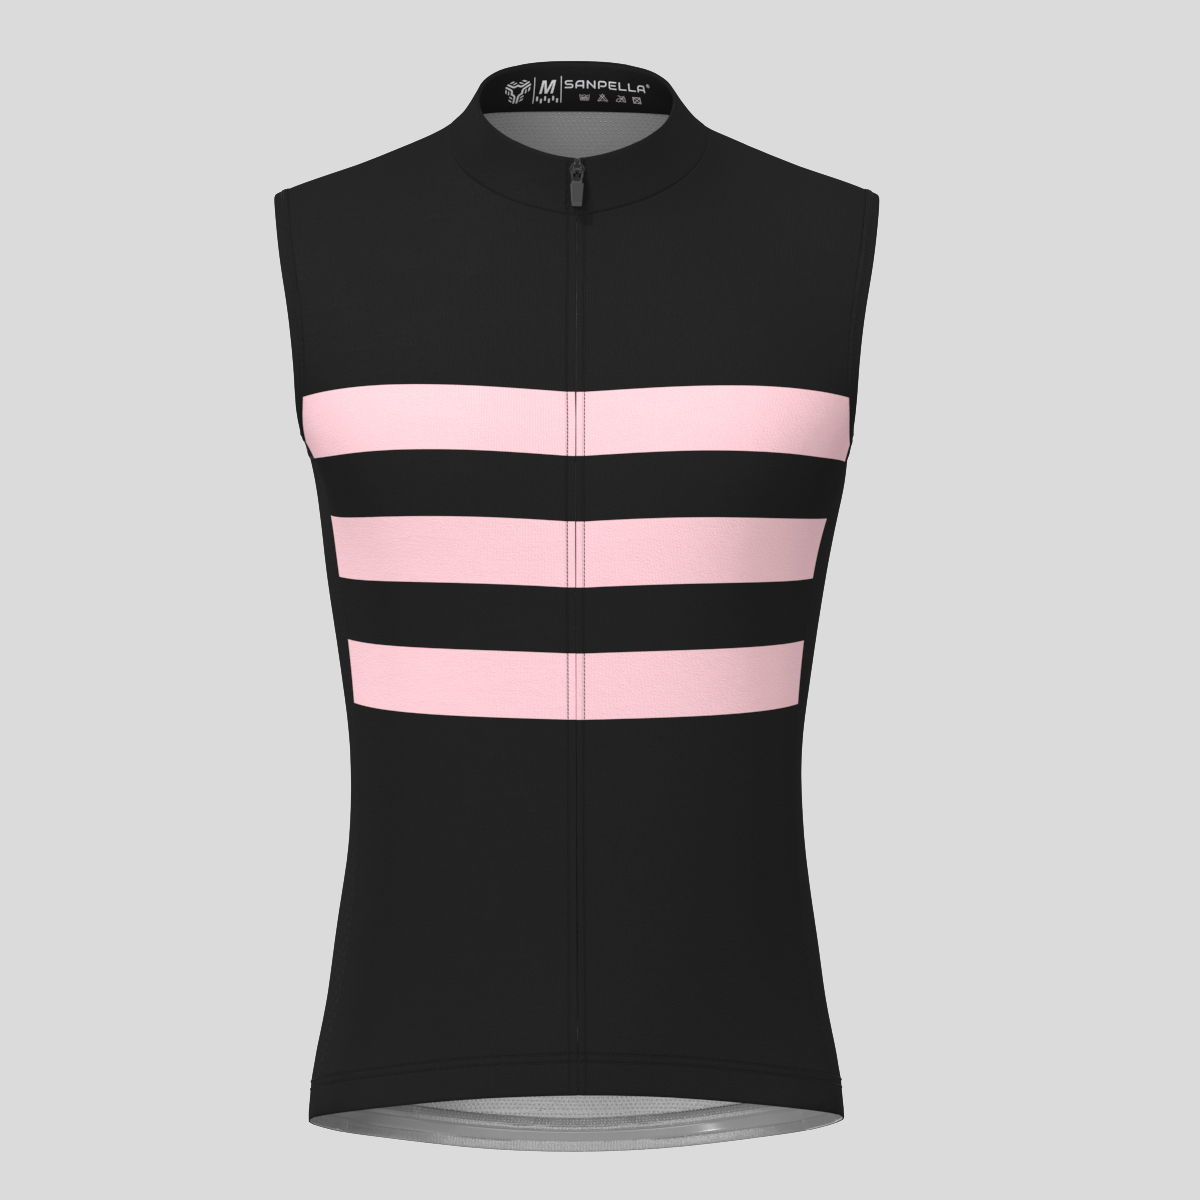 Men's Classic Stripes Sleeveless Cycling Jersey - Black/Pink